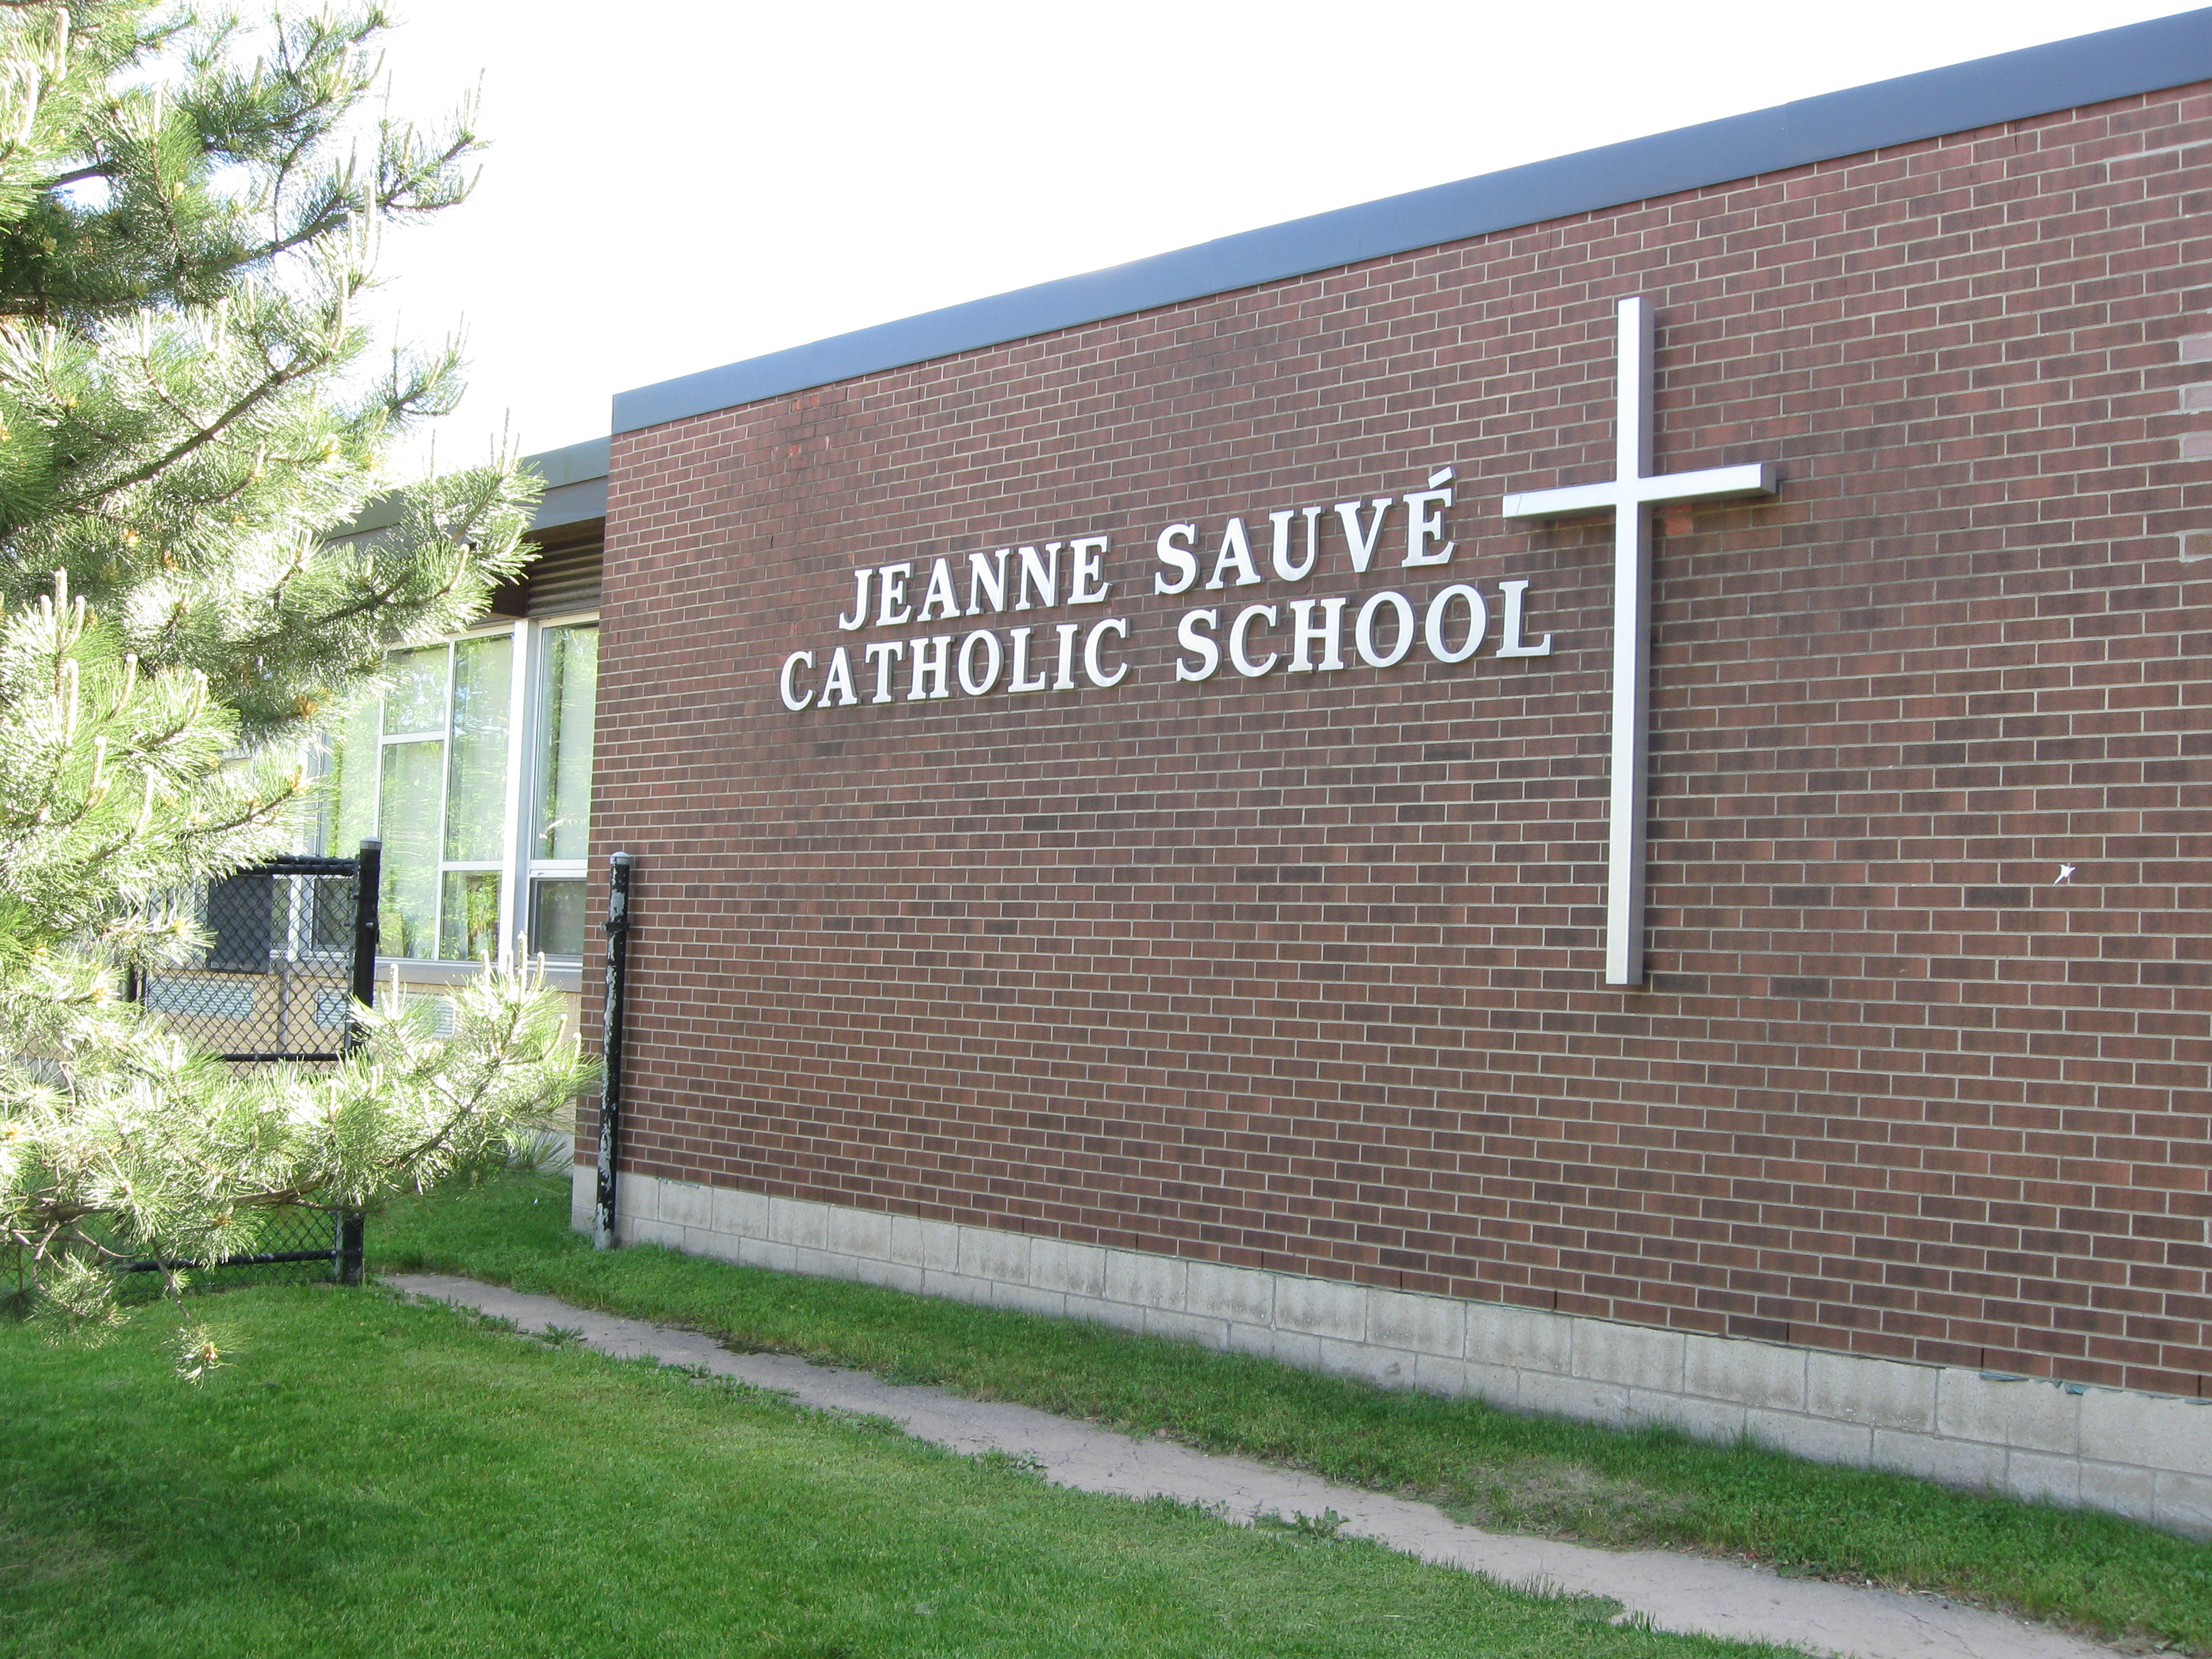 Image result for jeanne sauvé catholic school stratford ontario images